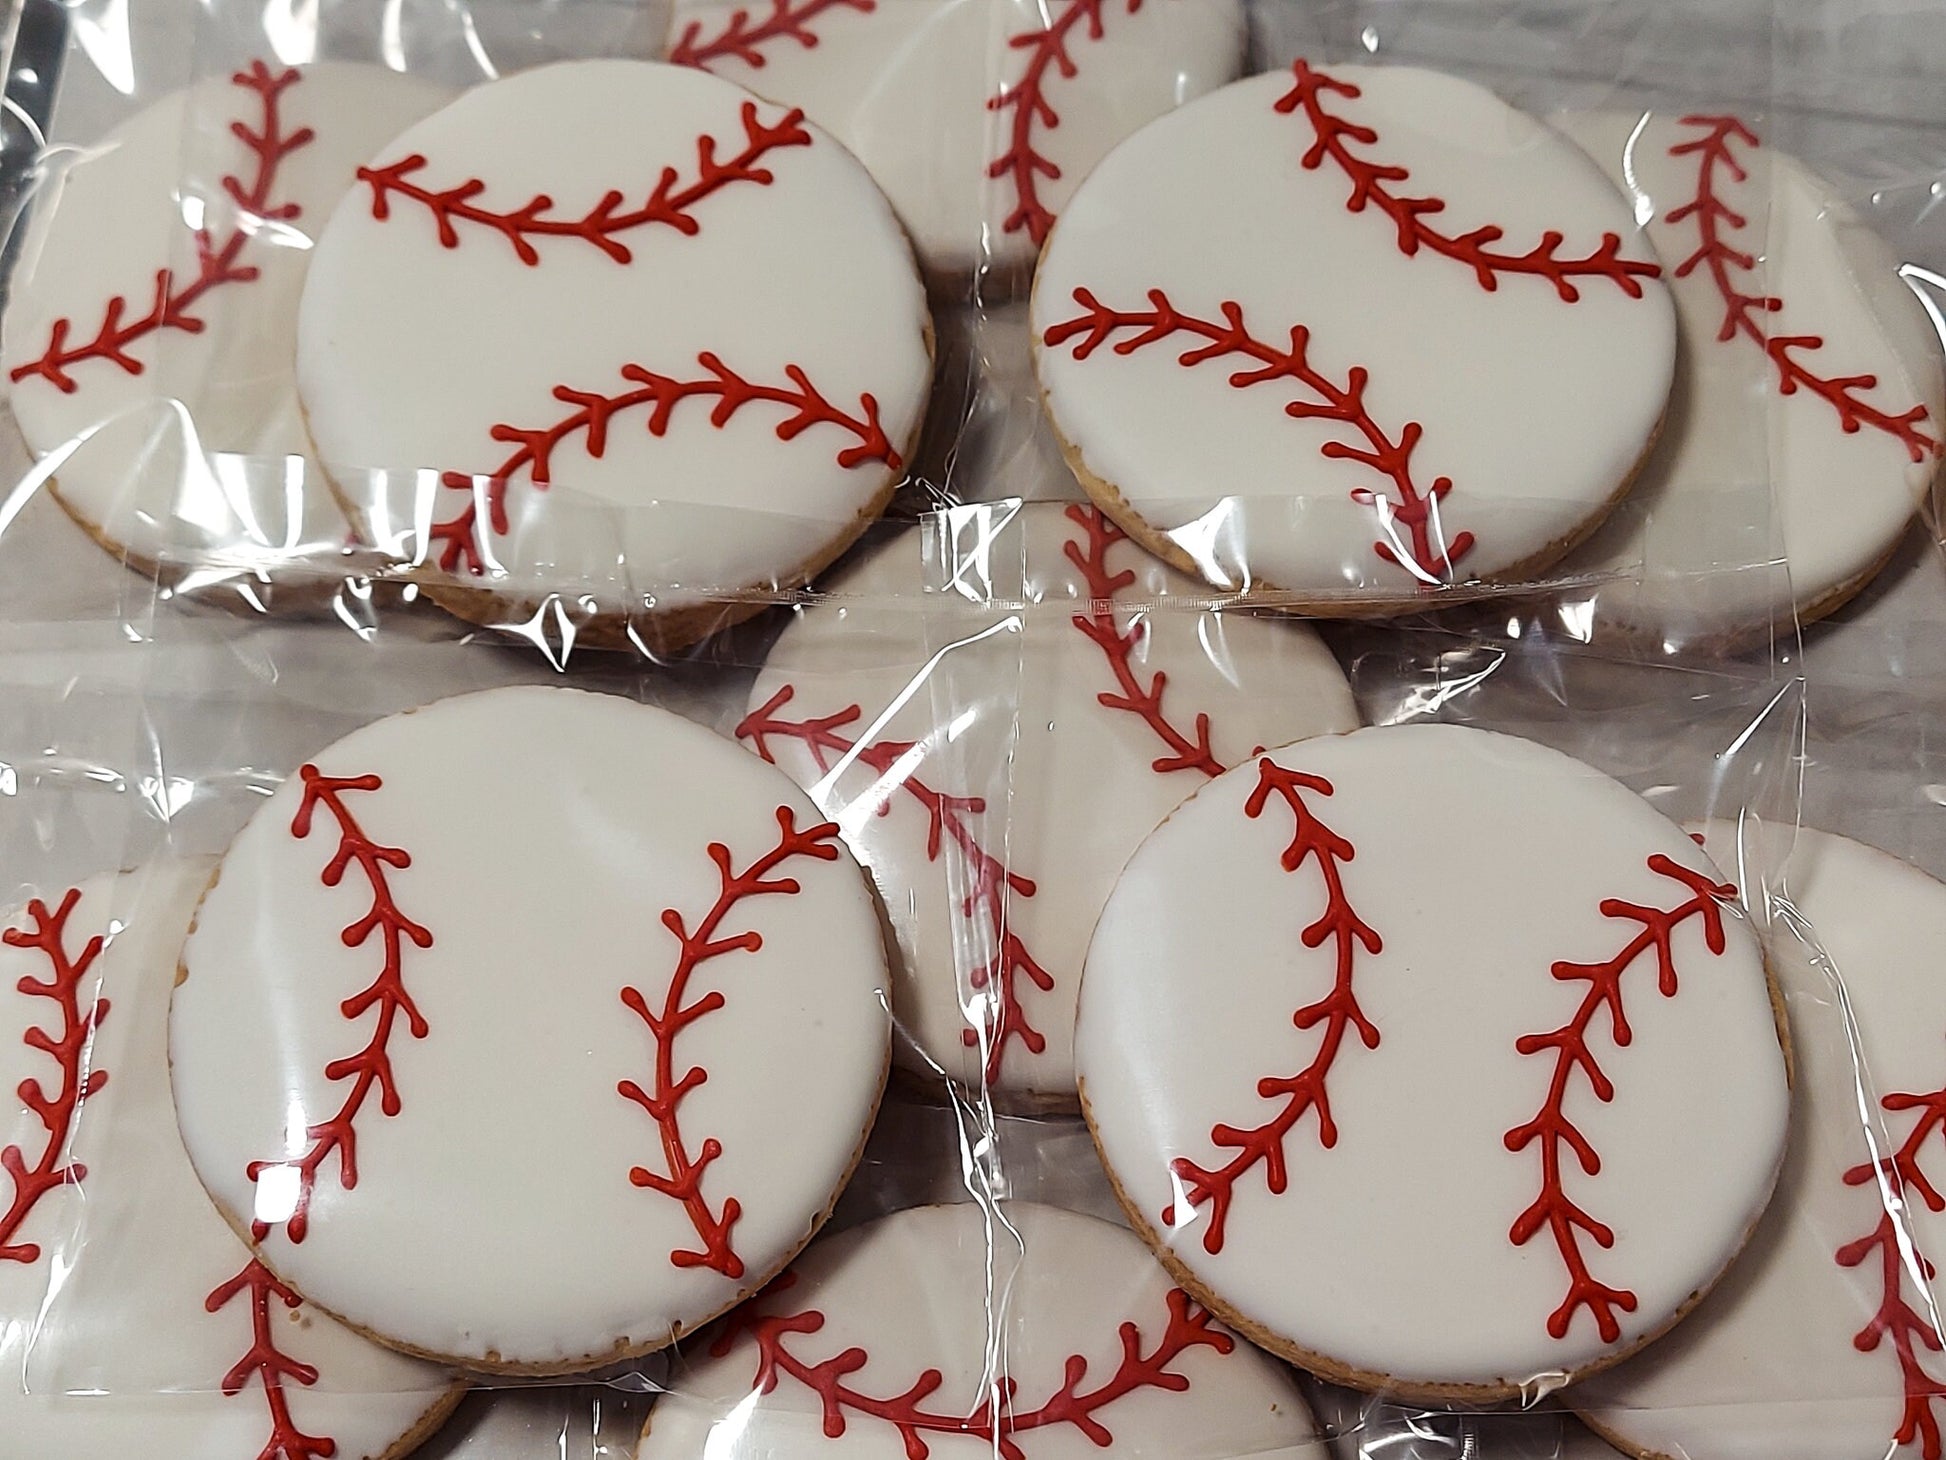 Baseball / Softball Cookies (1 dozen)